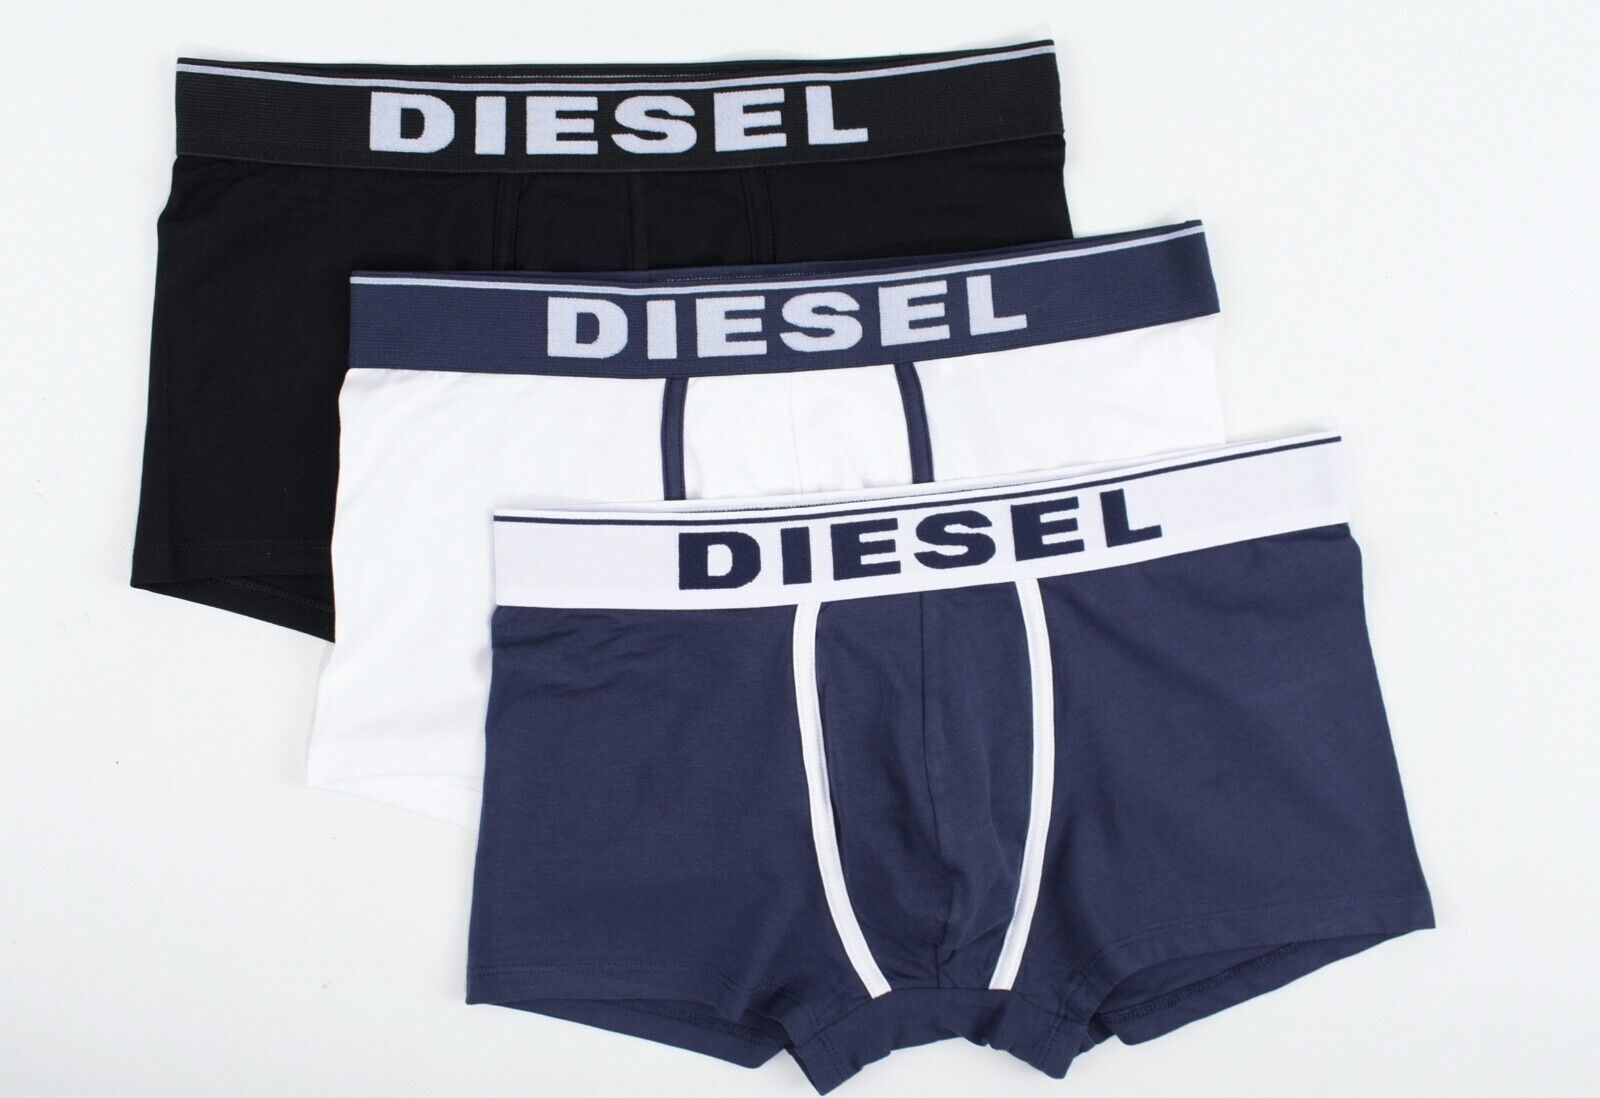 DIESEL Underwear: Men's DAMIEN 3-pk Boxer Trunks, Black/White/navy, size M